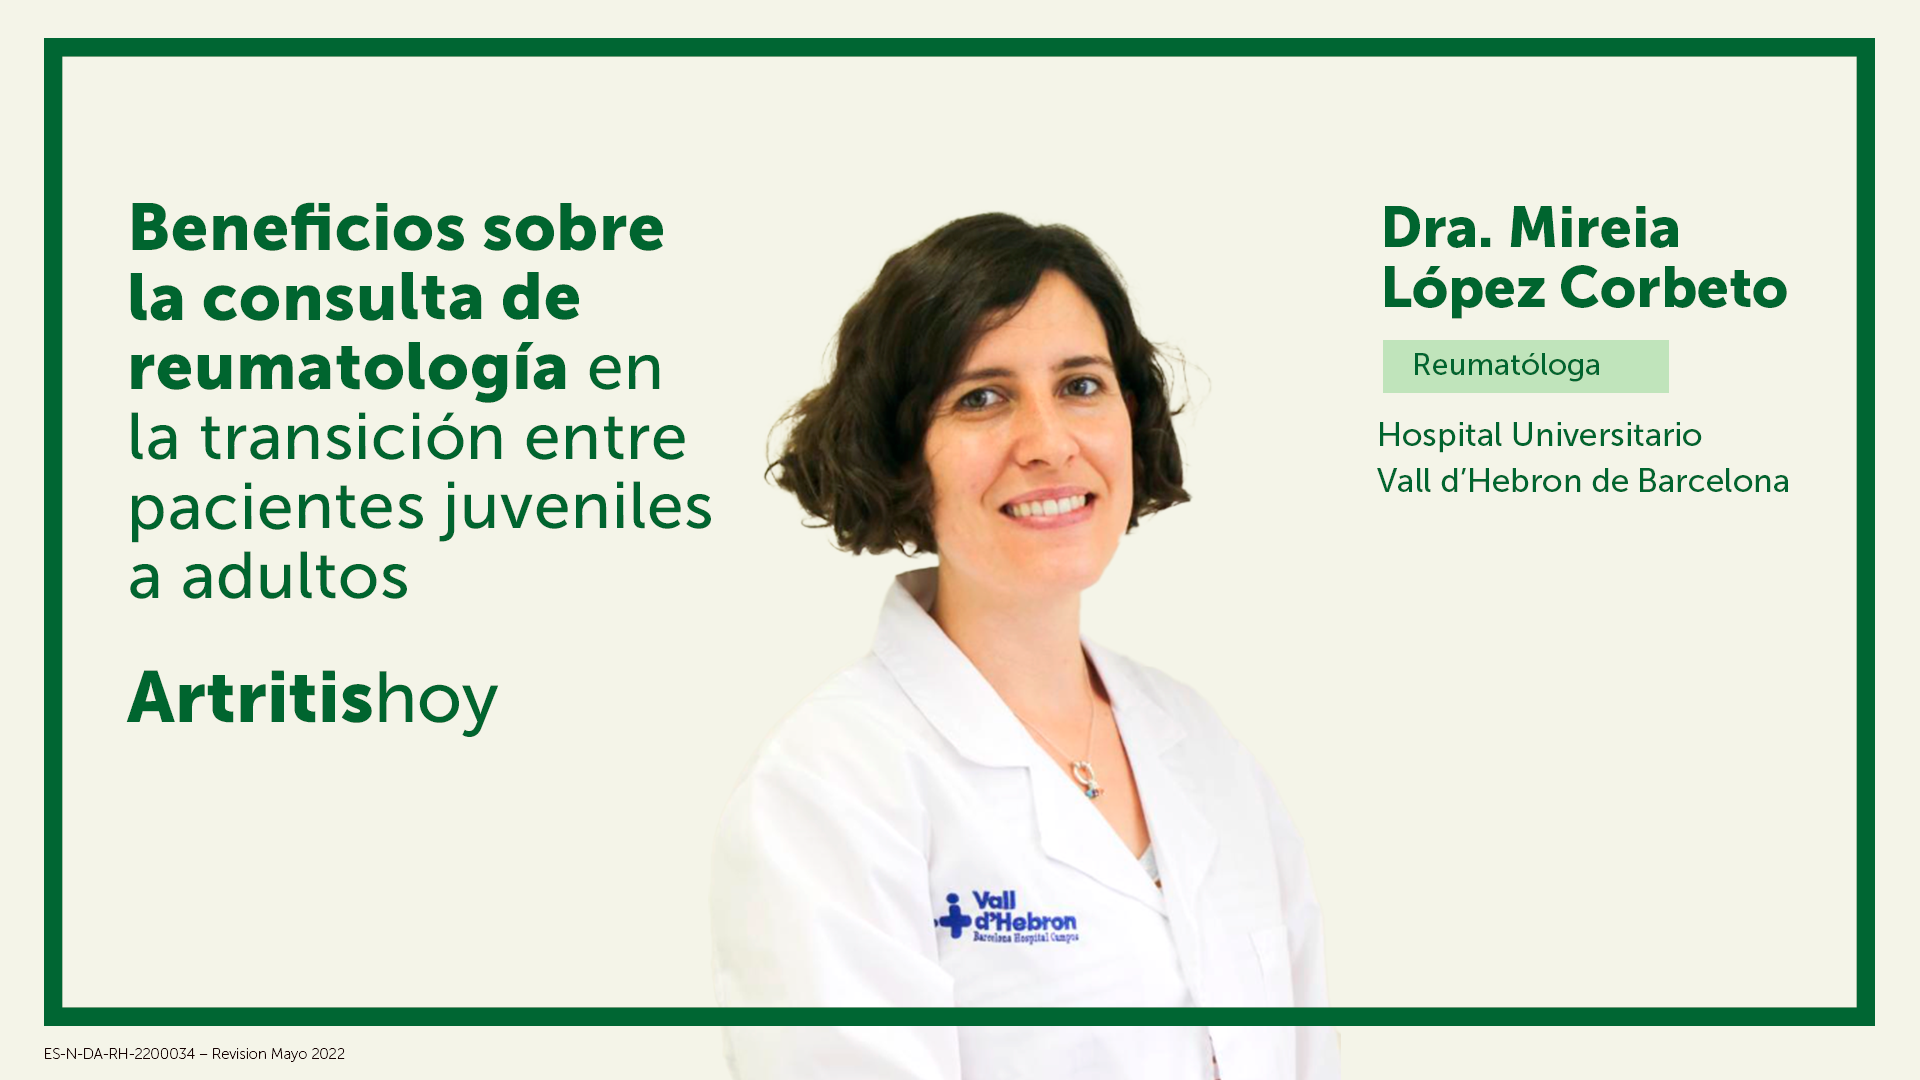 Dra. Mirea Lopez consulta reumatologia